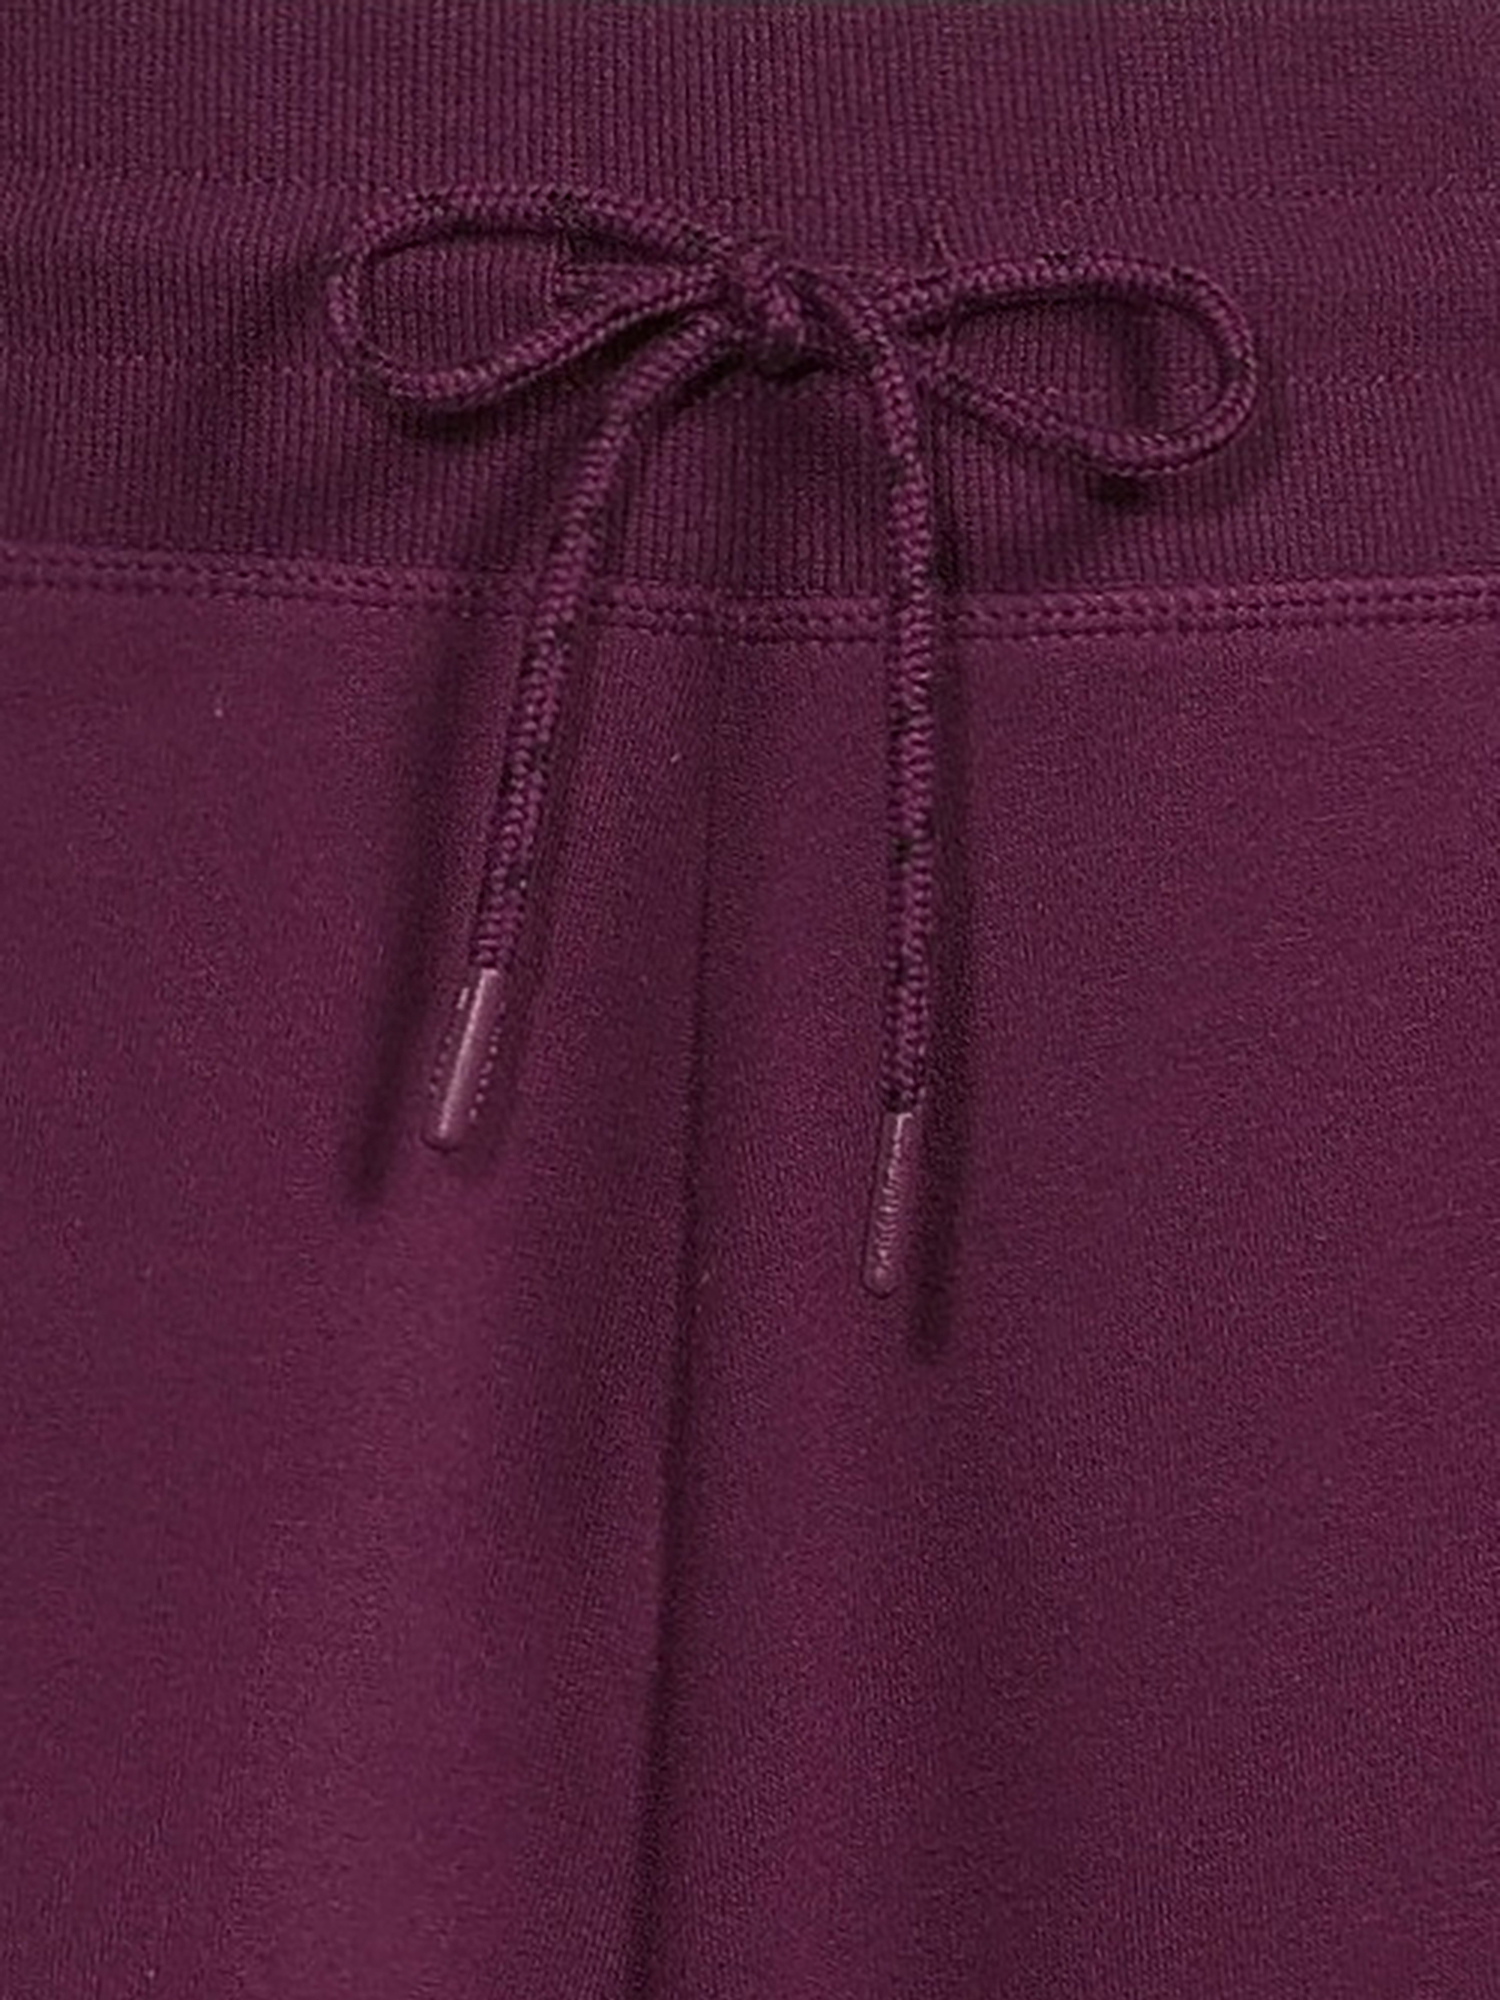 Reebok Women's Plus Size Gravity Super Soft Fleece Jogger Pants with ...